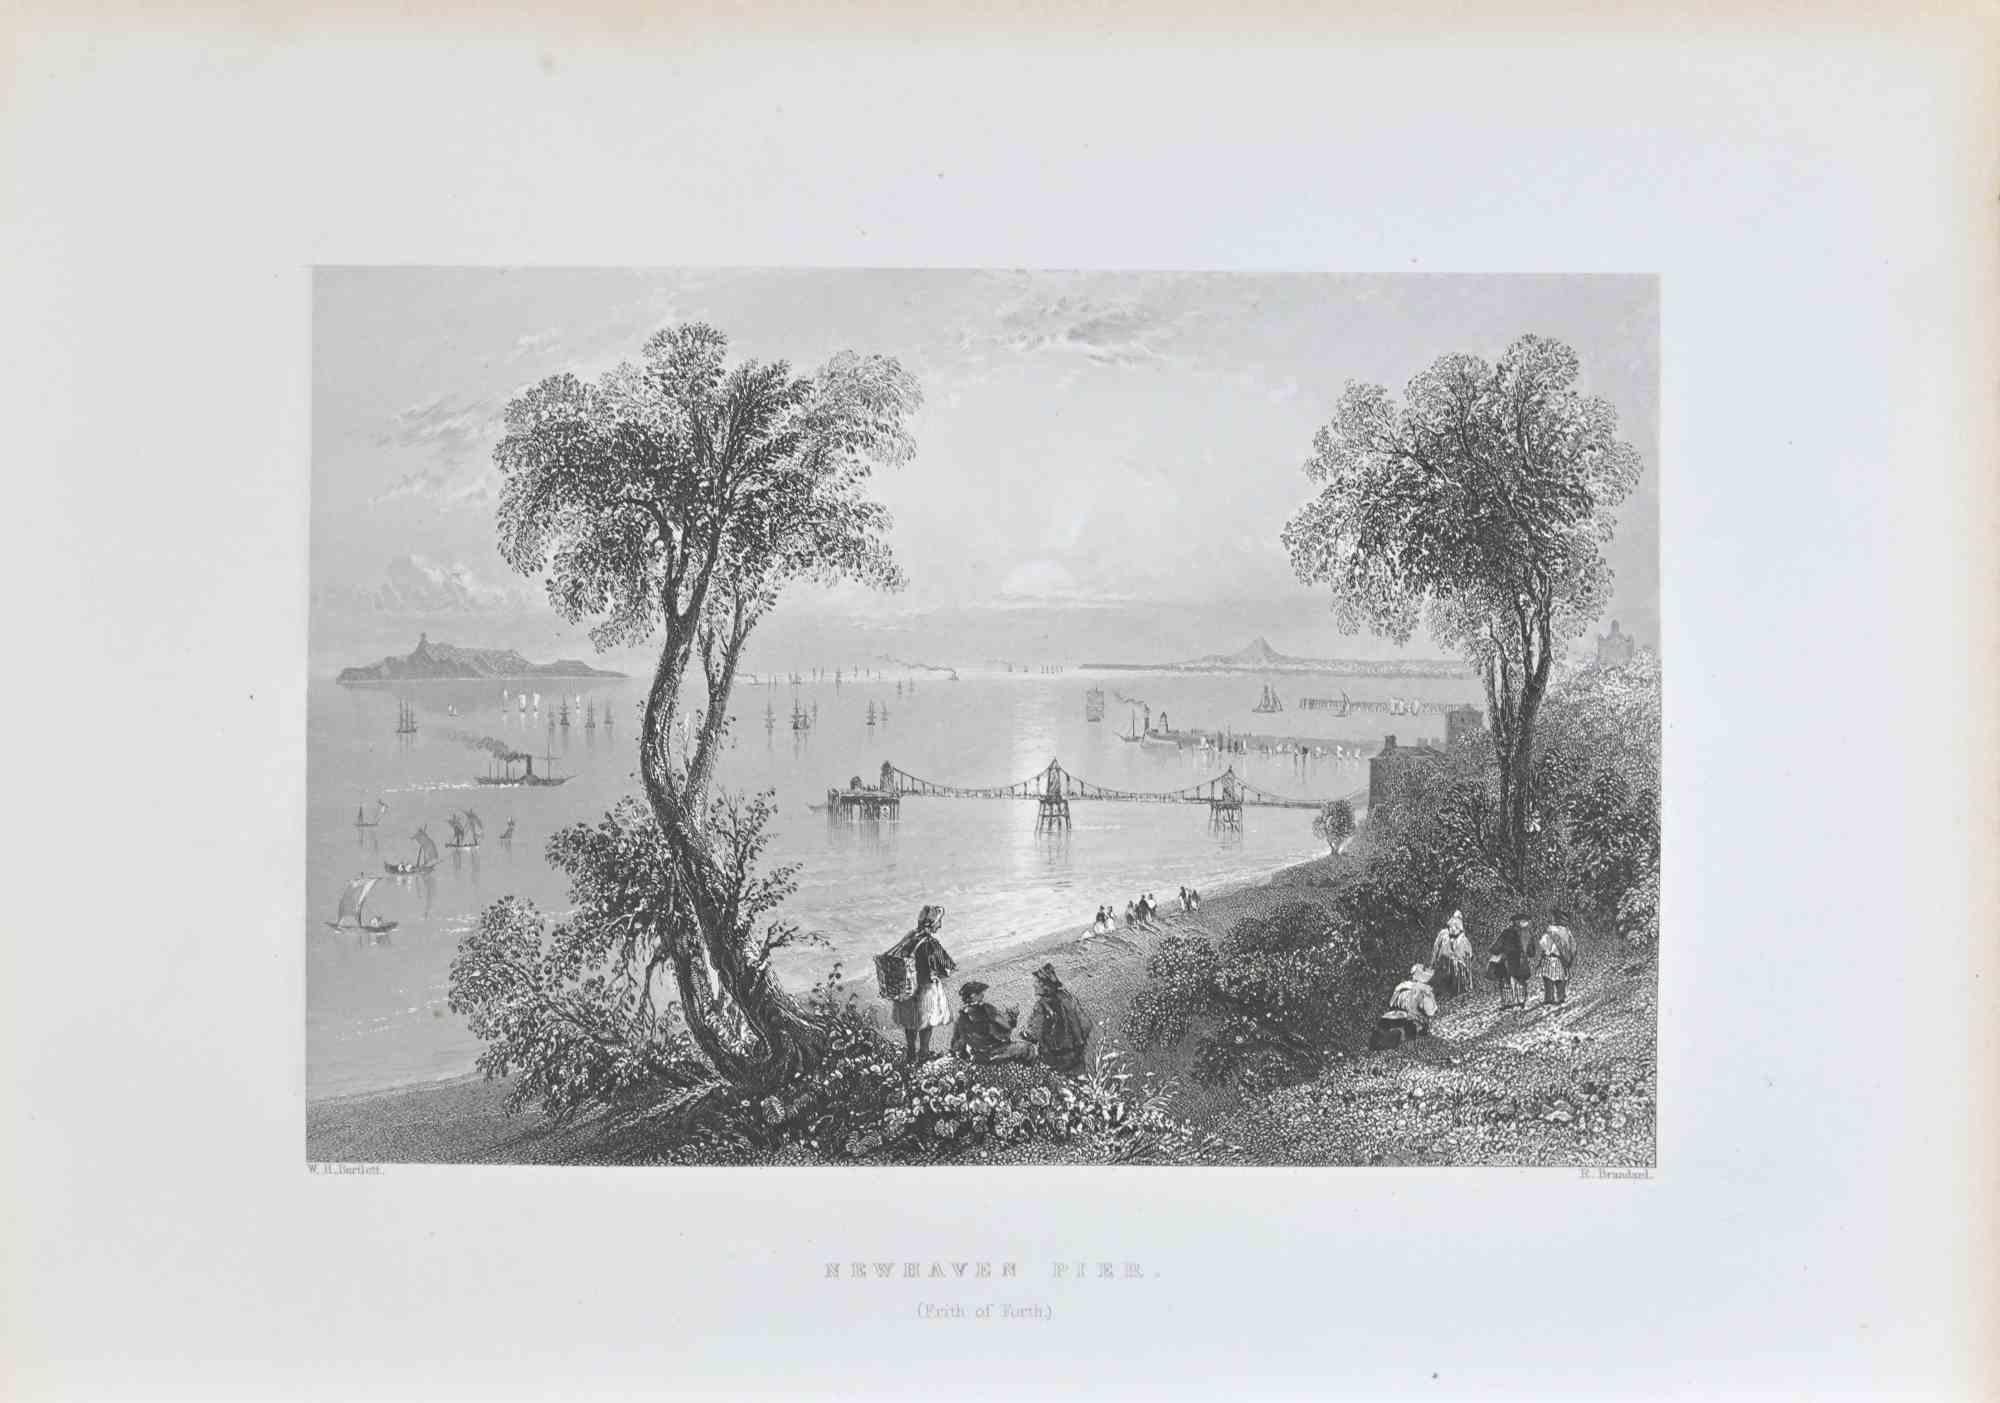 Newhaven Pier - Engraving by Robert Brandard - 1838